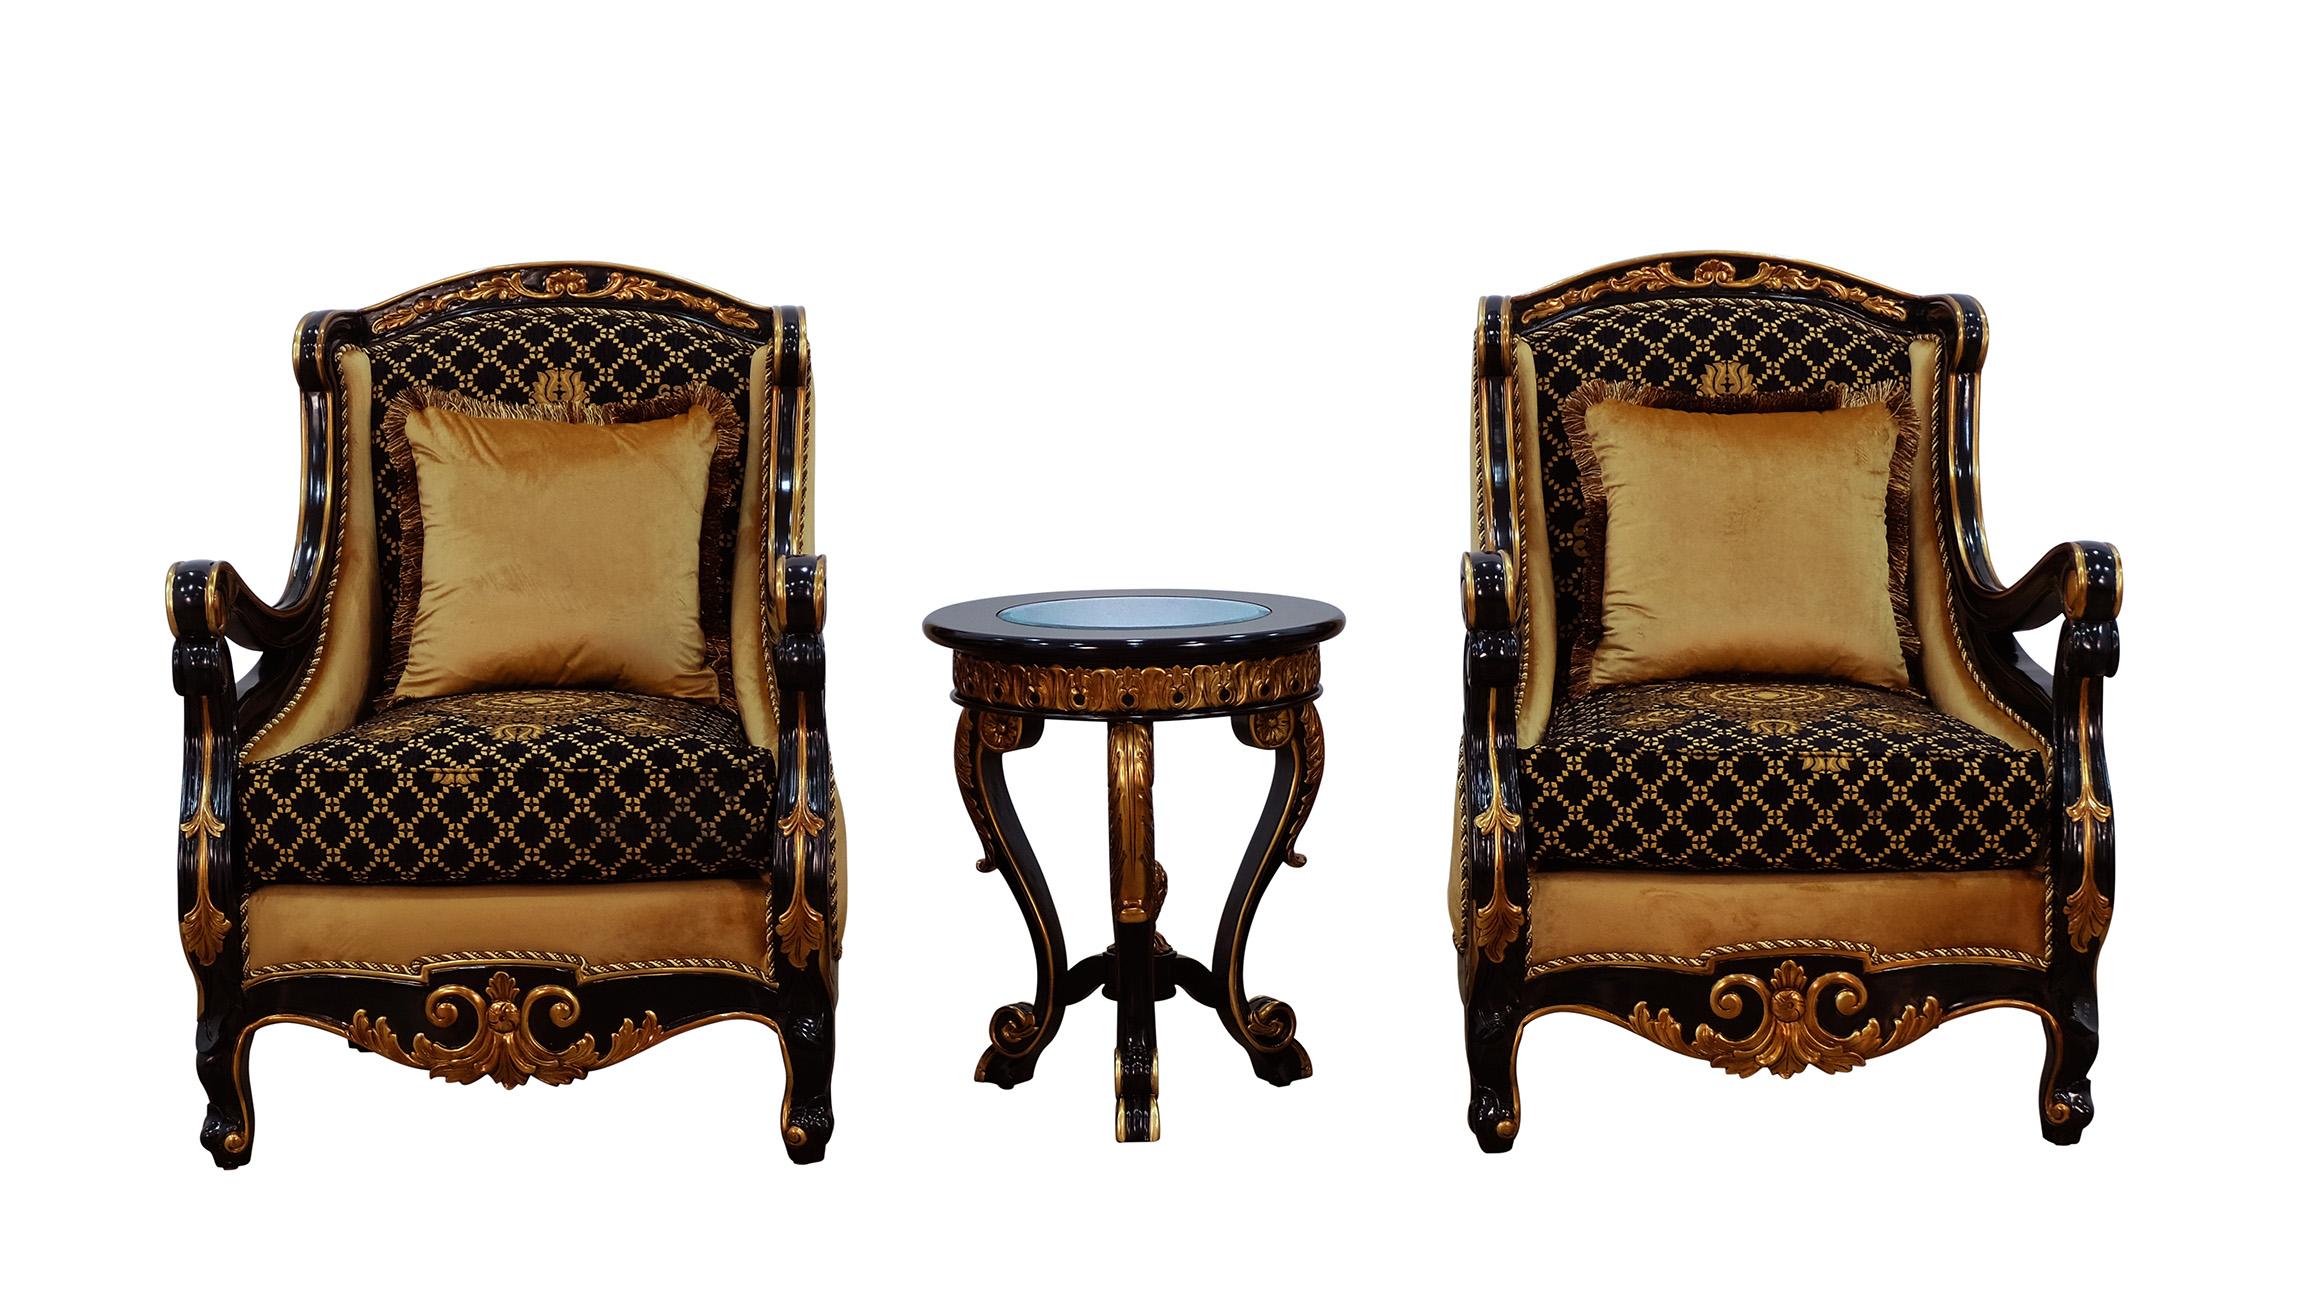 Classic, Traditional Arm Chair Set RAFFAELLO 41024-C-Set-2 in Antique, Silver, Gold, Black Fabric